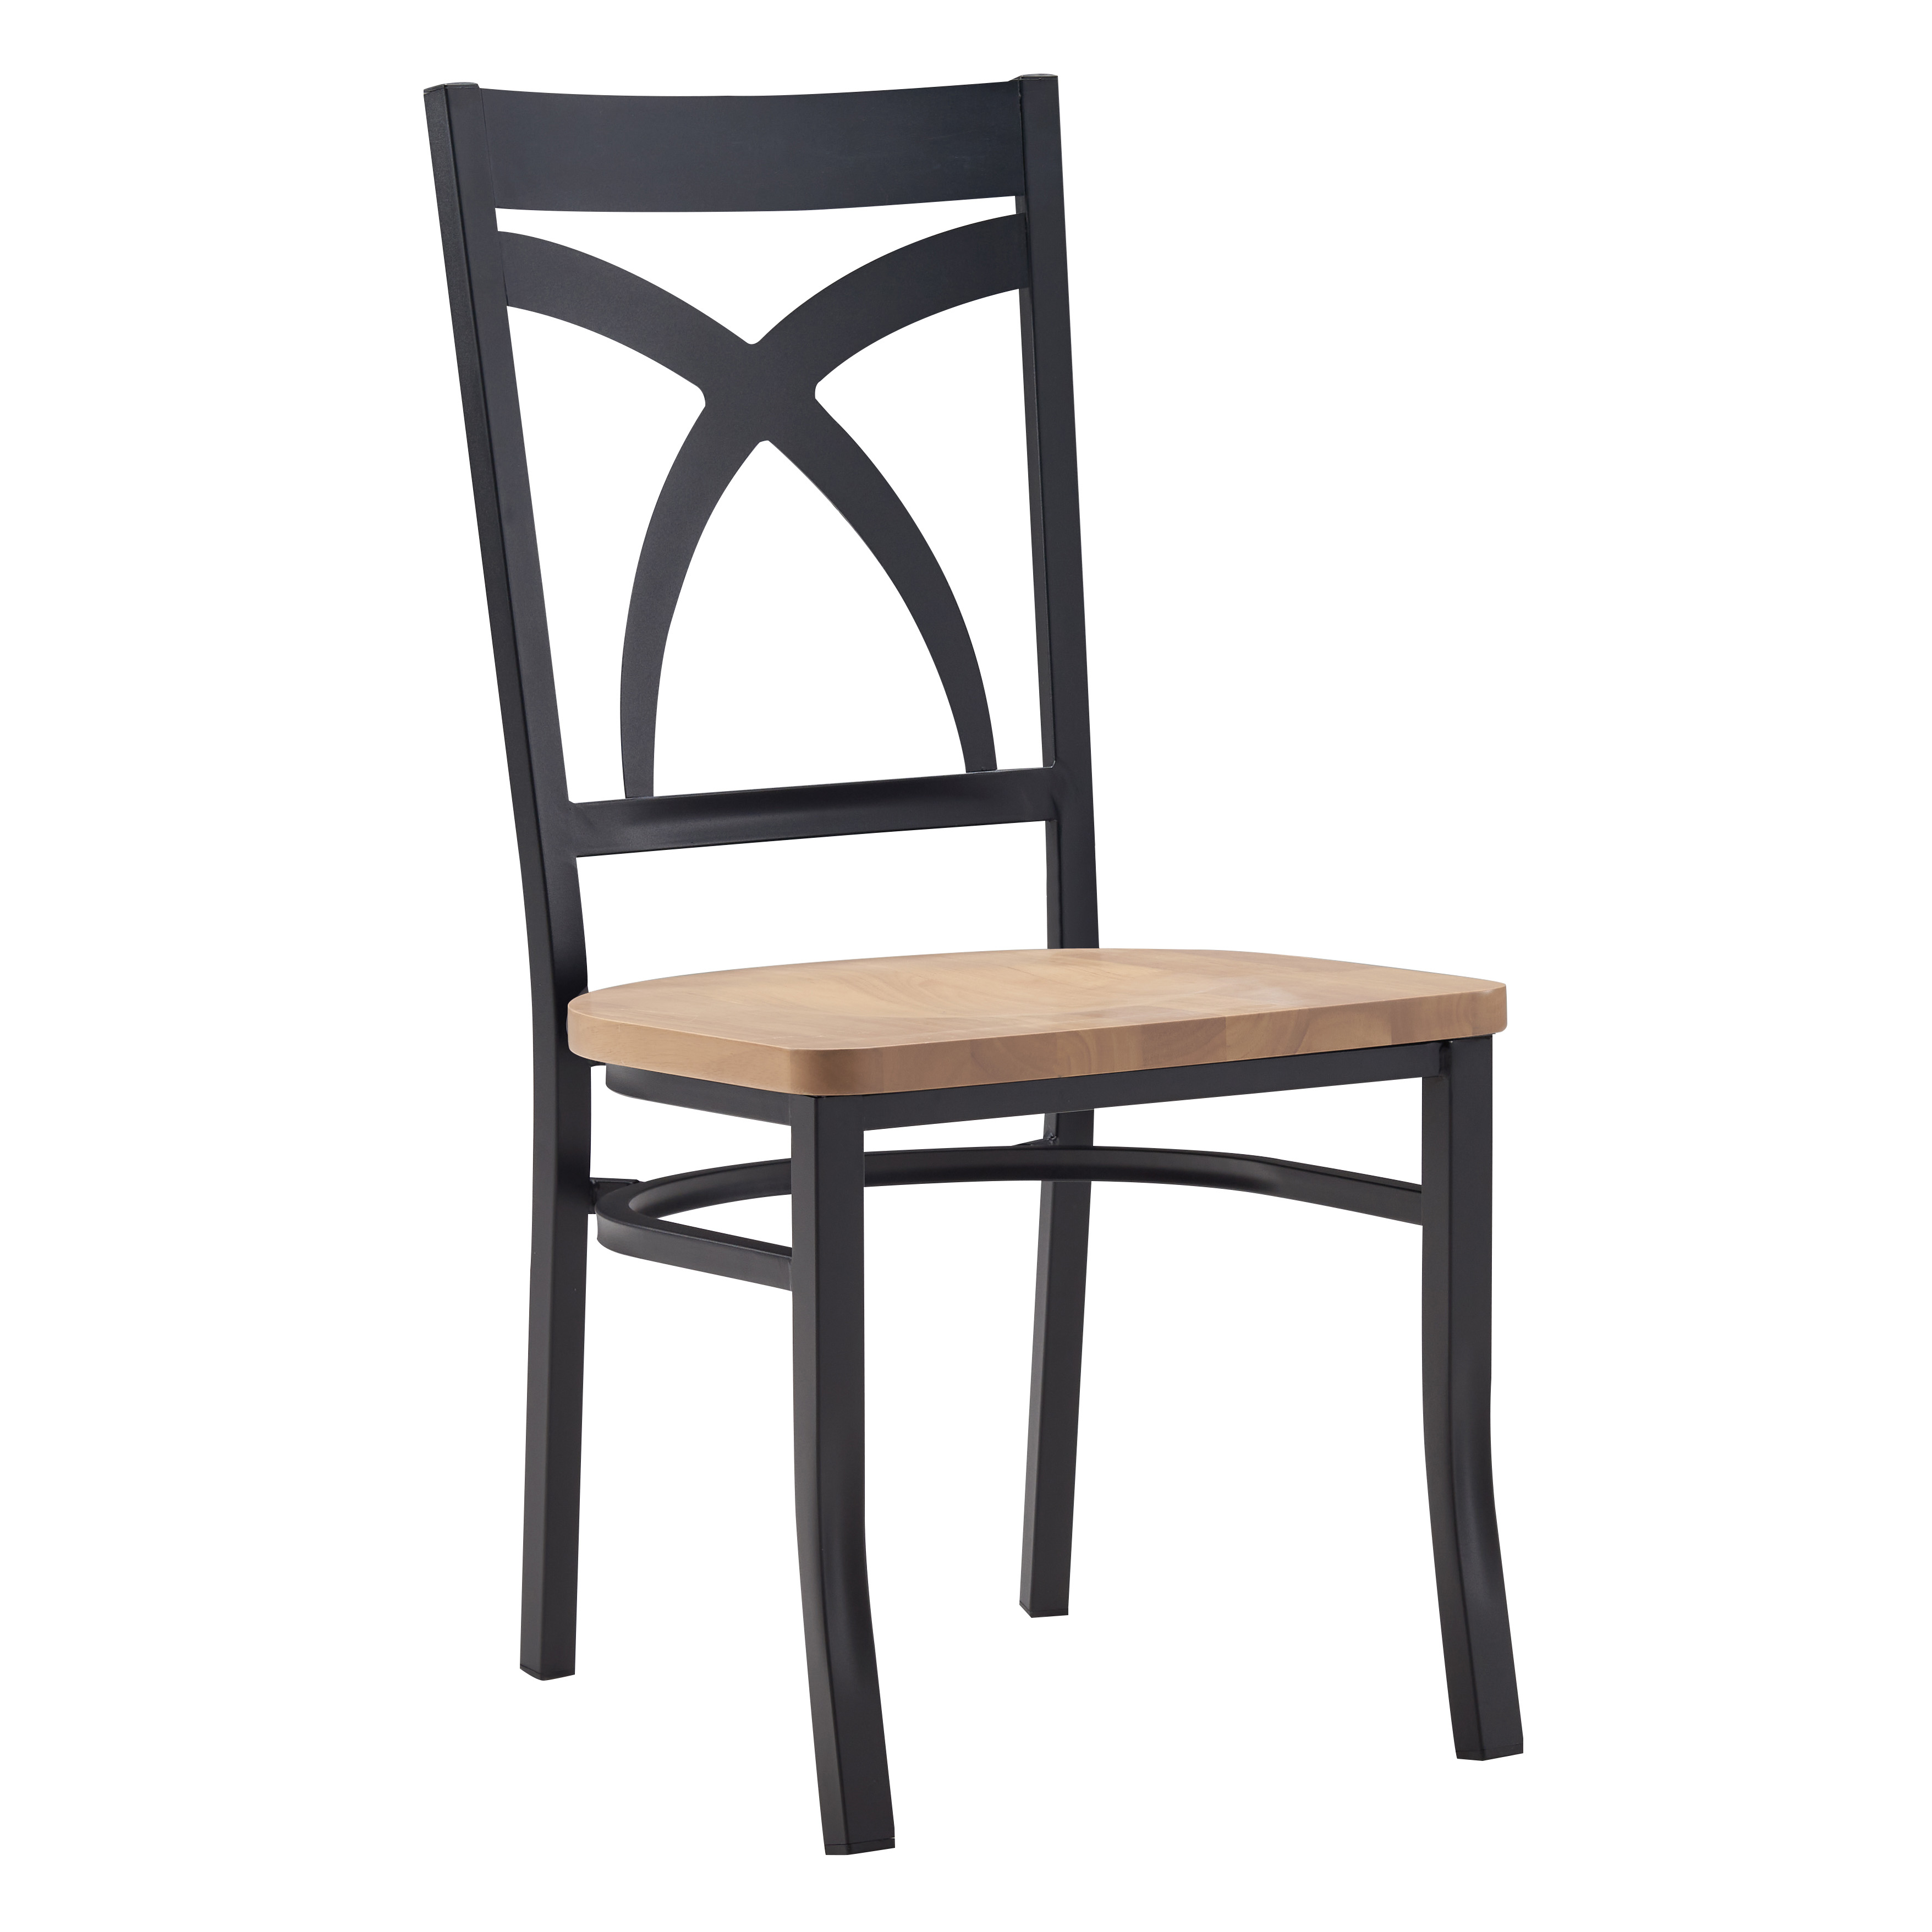 Dexel Metal Chair (Natural Wood Seat)